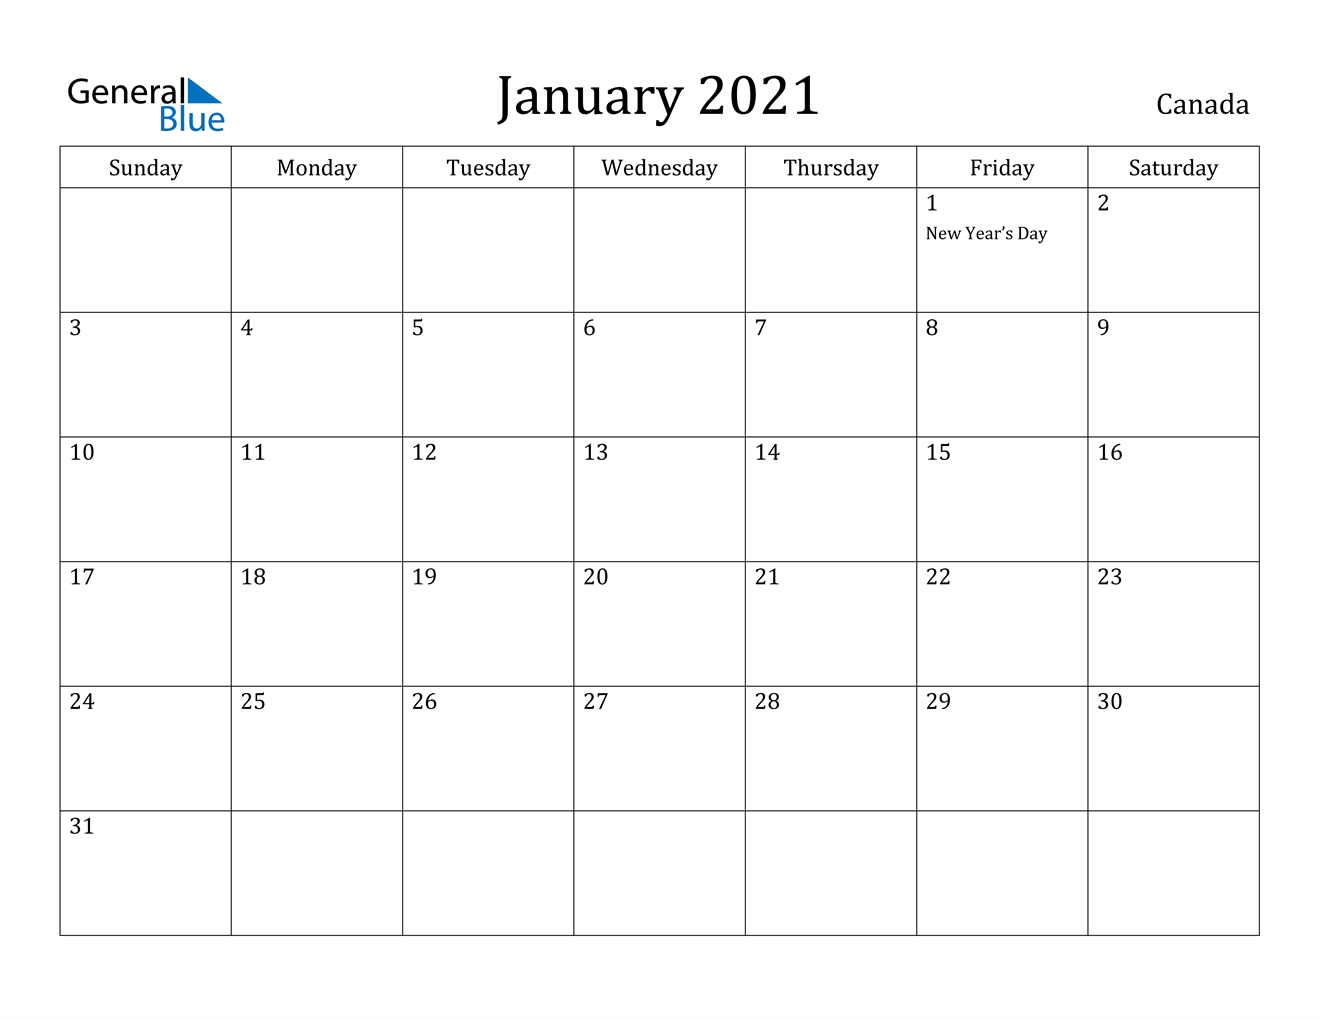 January 2021 Calendar - Canada